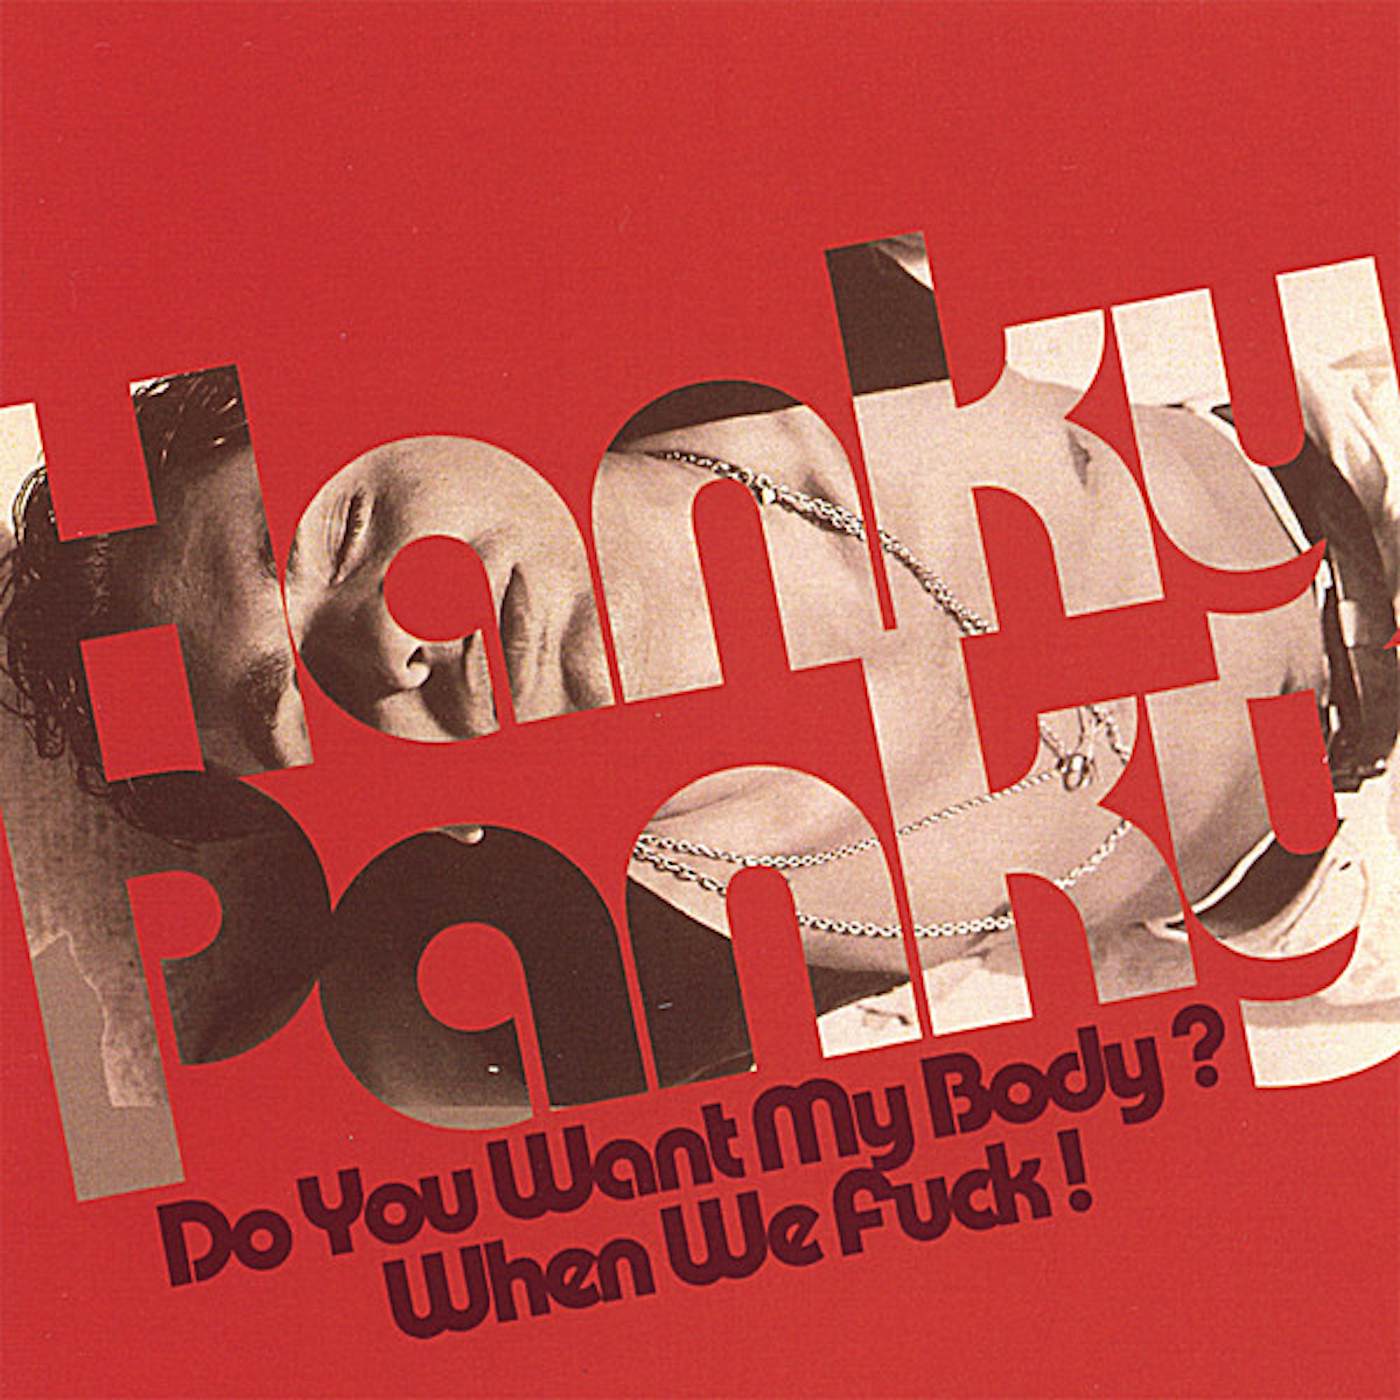 Hanky Panky DO YOU WANT MY BODY? CD